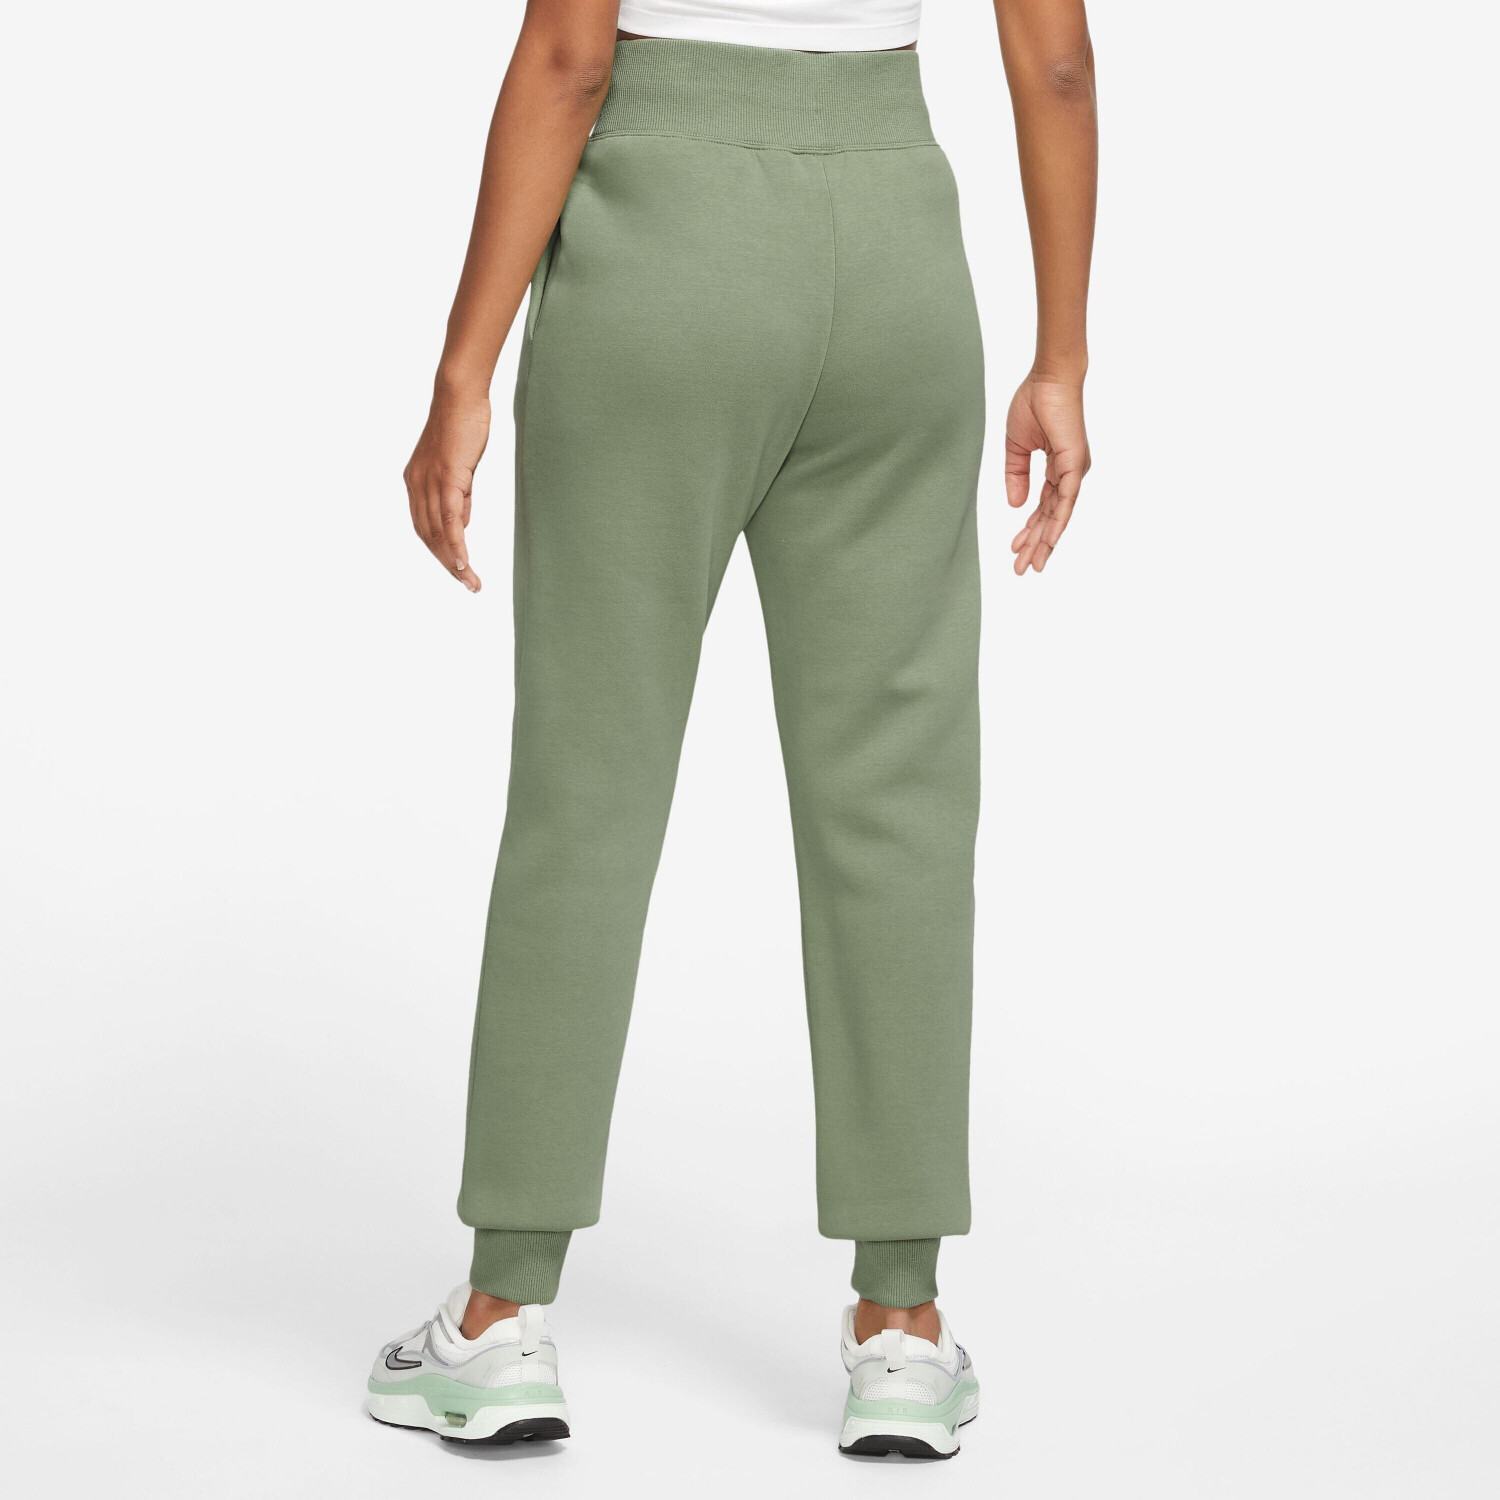 Nike Phoenix Fleece pants, green and white